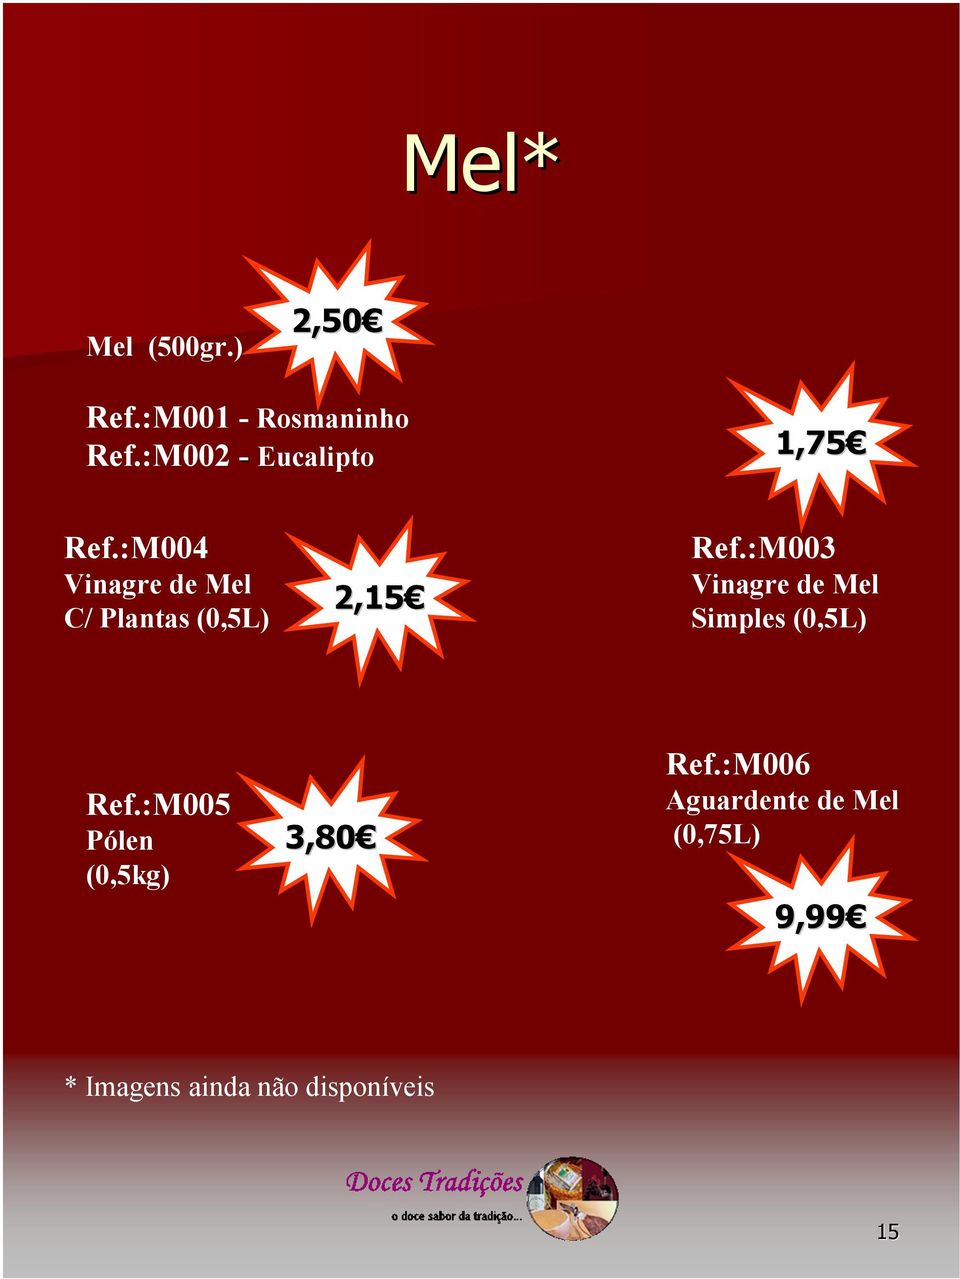 :M004 Vinagre de Mel C/ Plantas (0,5L) 2,15 Ref.